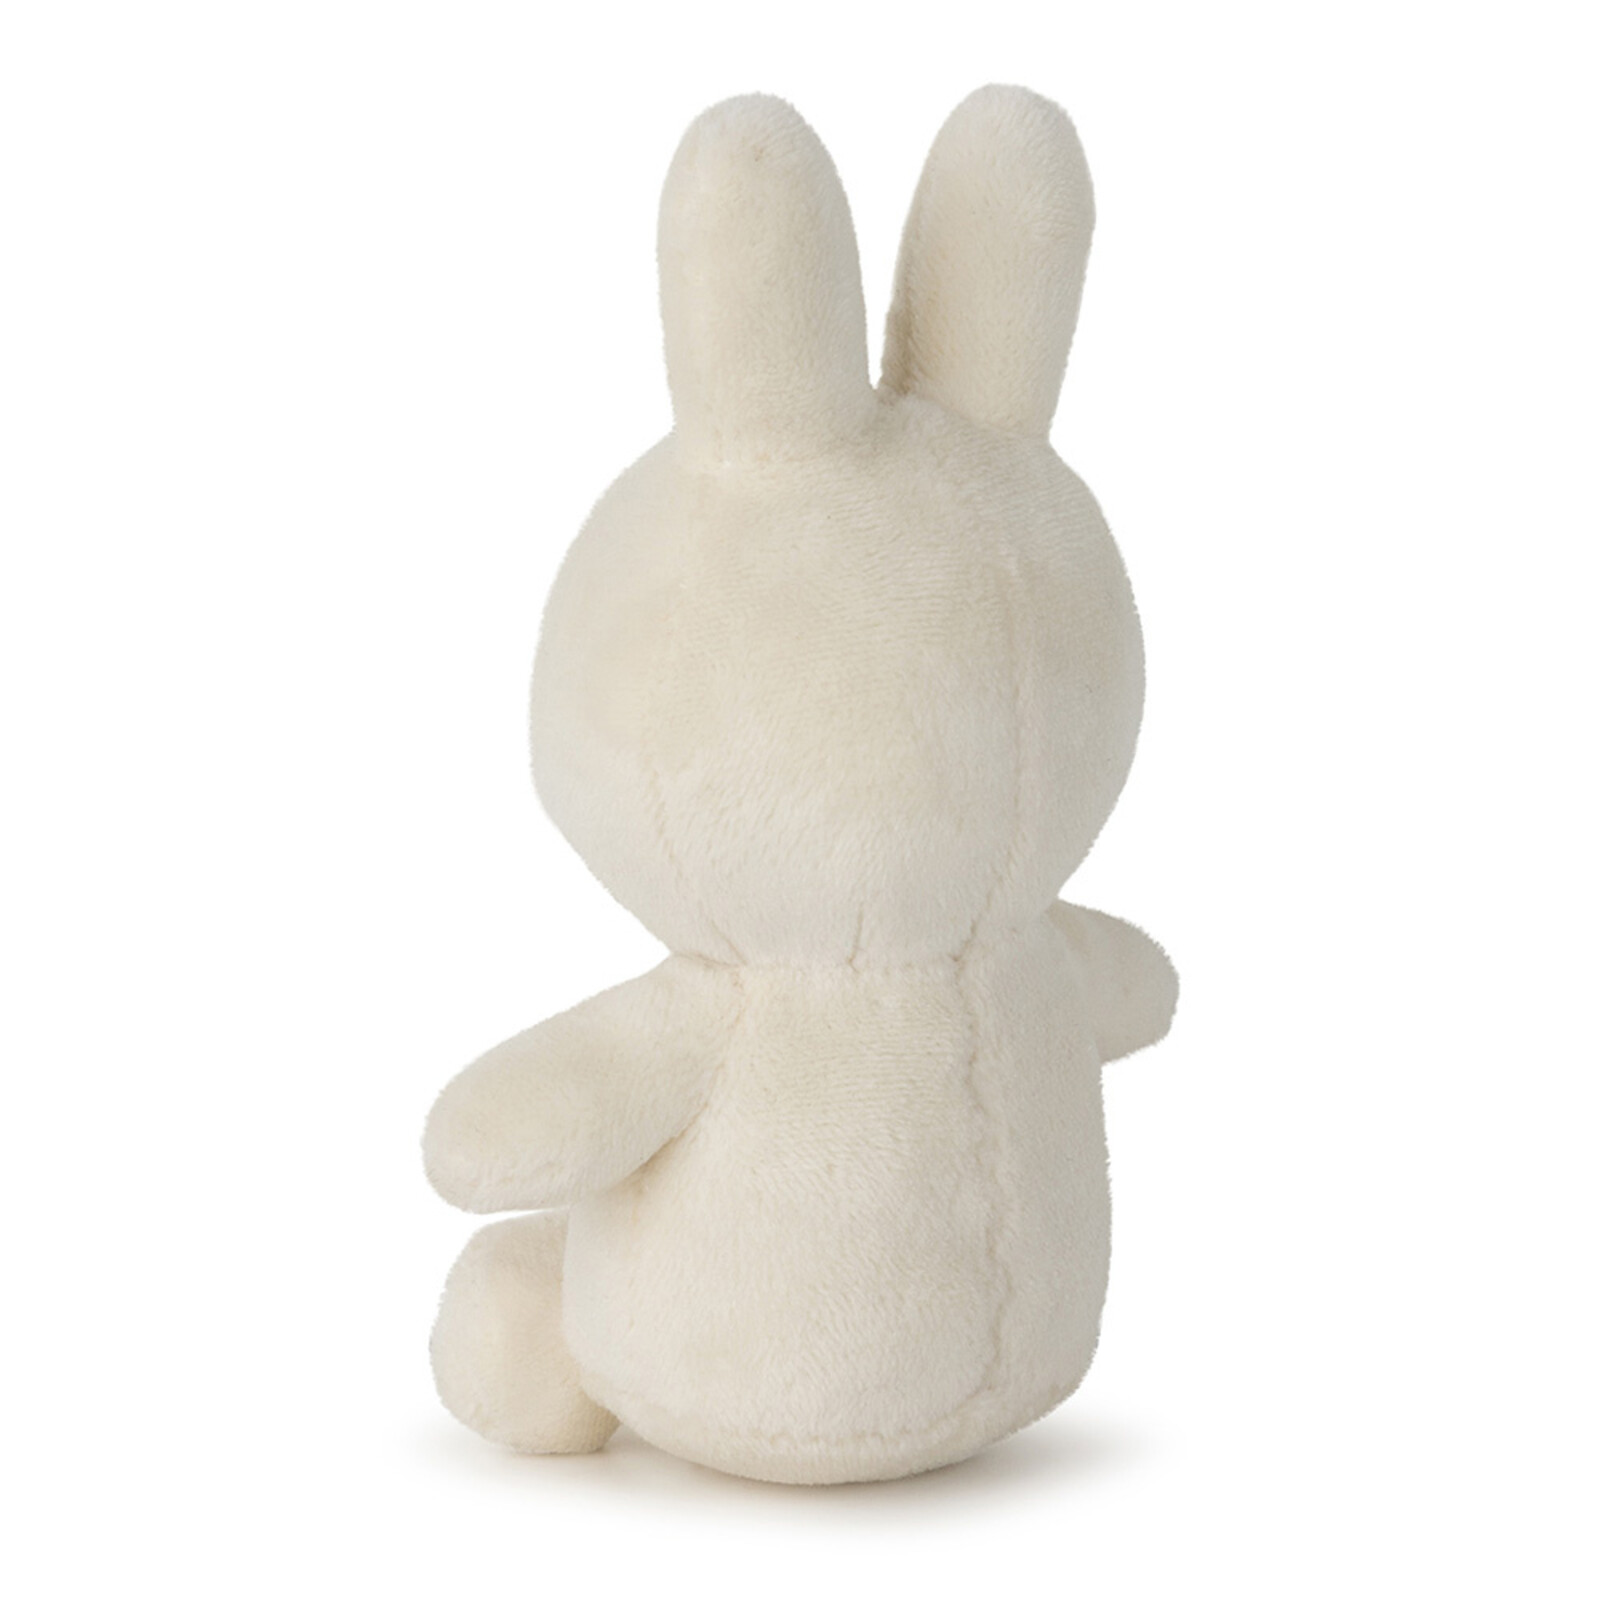 Lucky Miffy Sitting Cream in giftbox - 10 cm - 4"